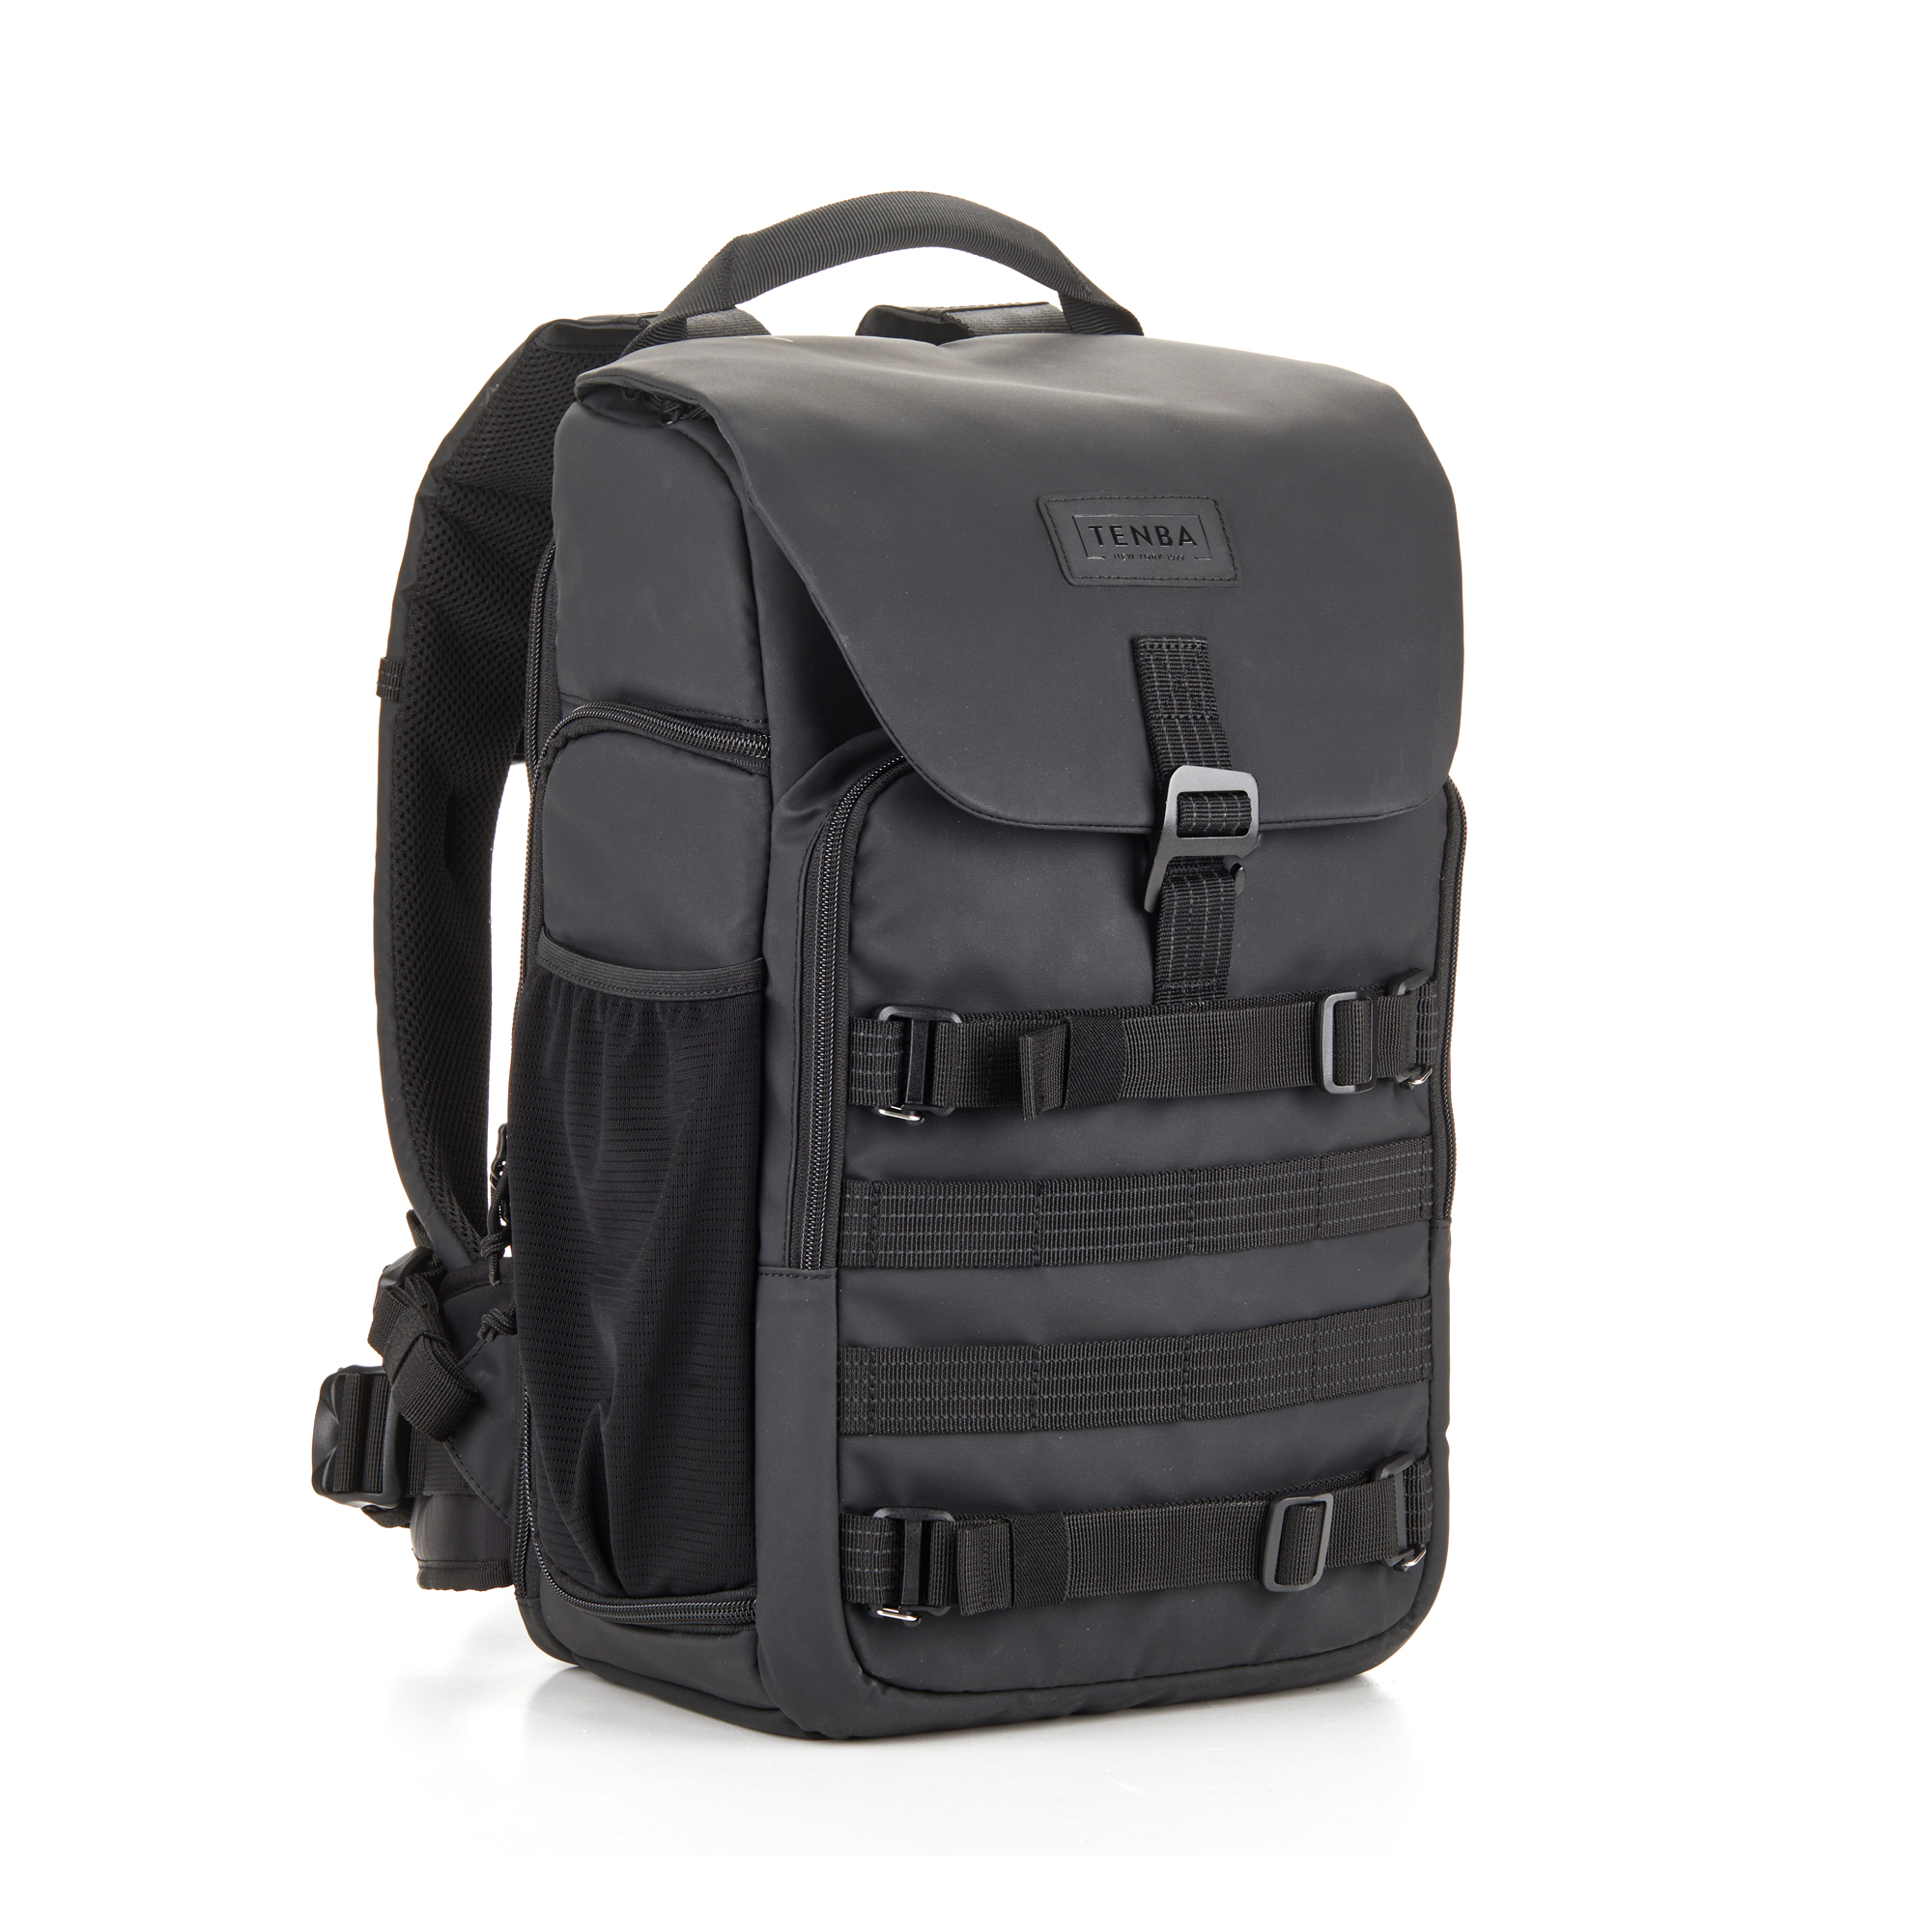 Рюкзак Tenba Axis v2 Tactical LT 18 black для фототехники